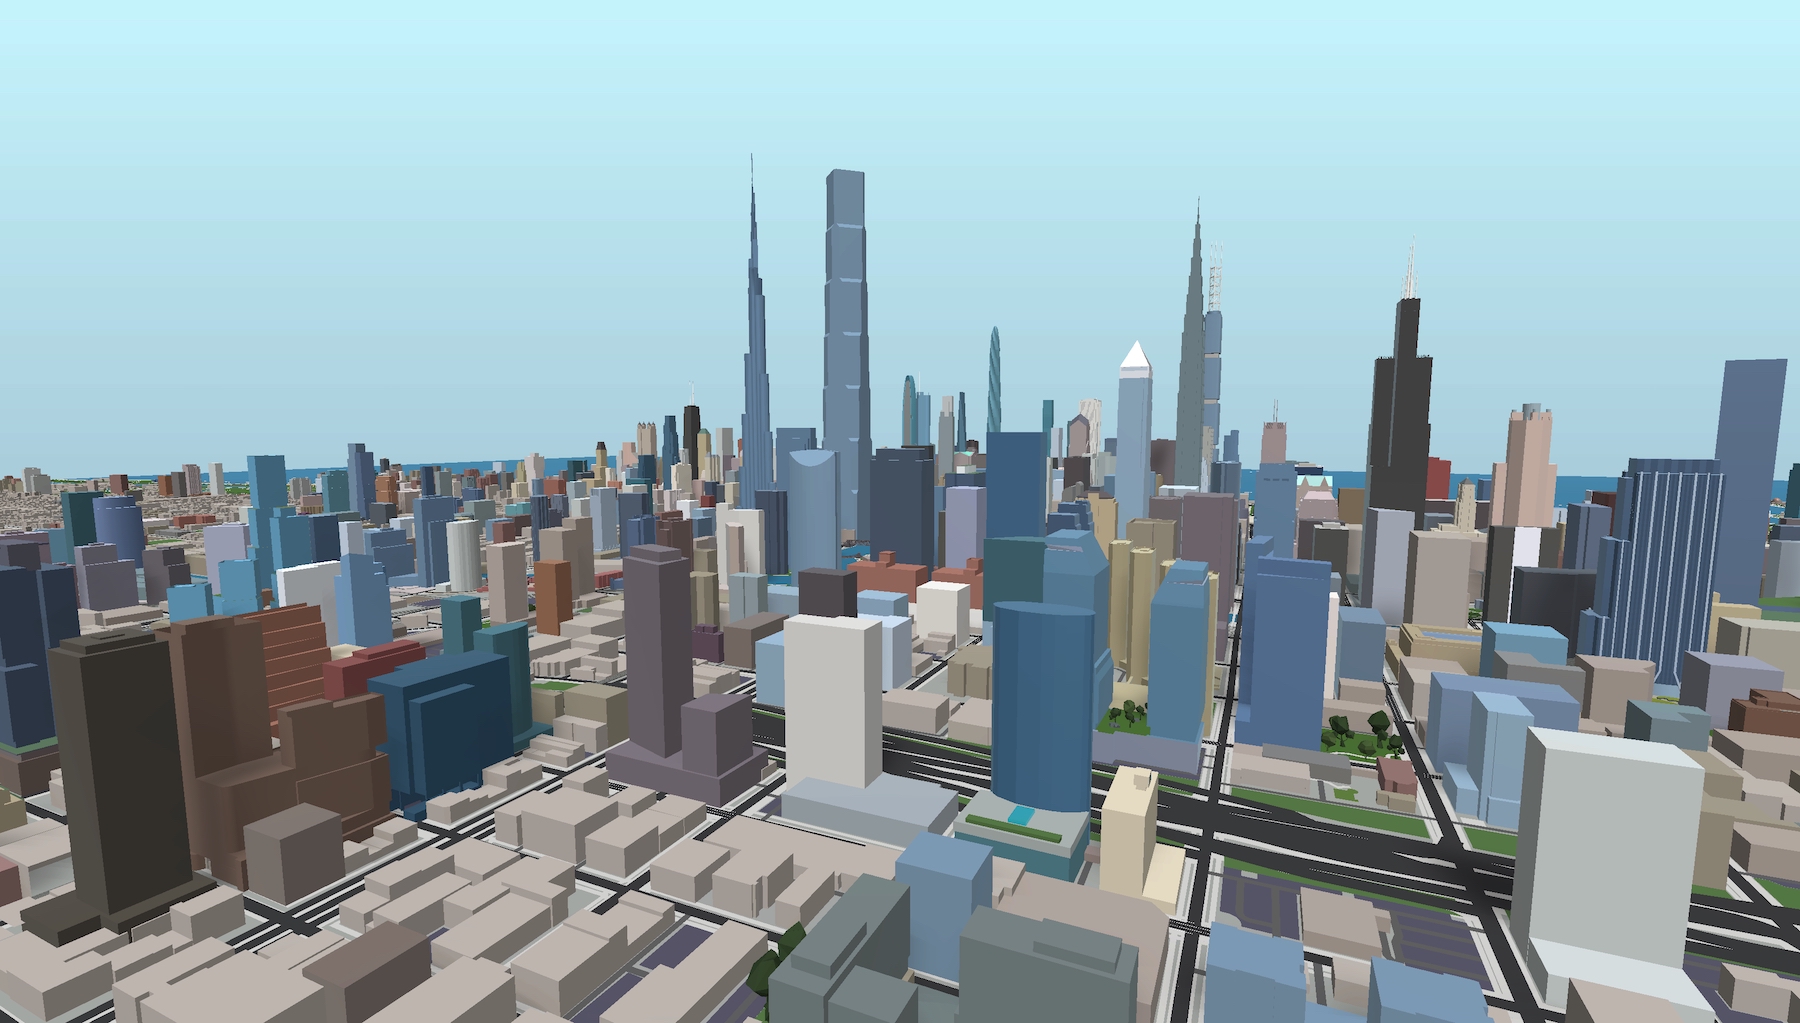 Chicago World Trade Center (Iteration #3) compared to Burj Khalifa